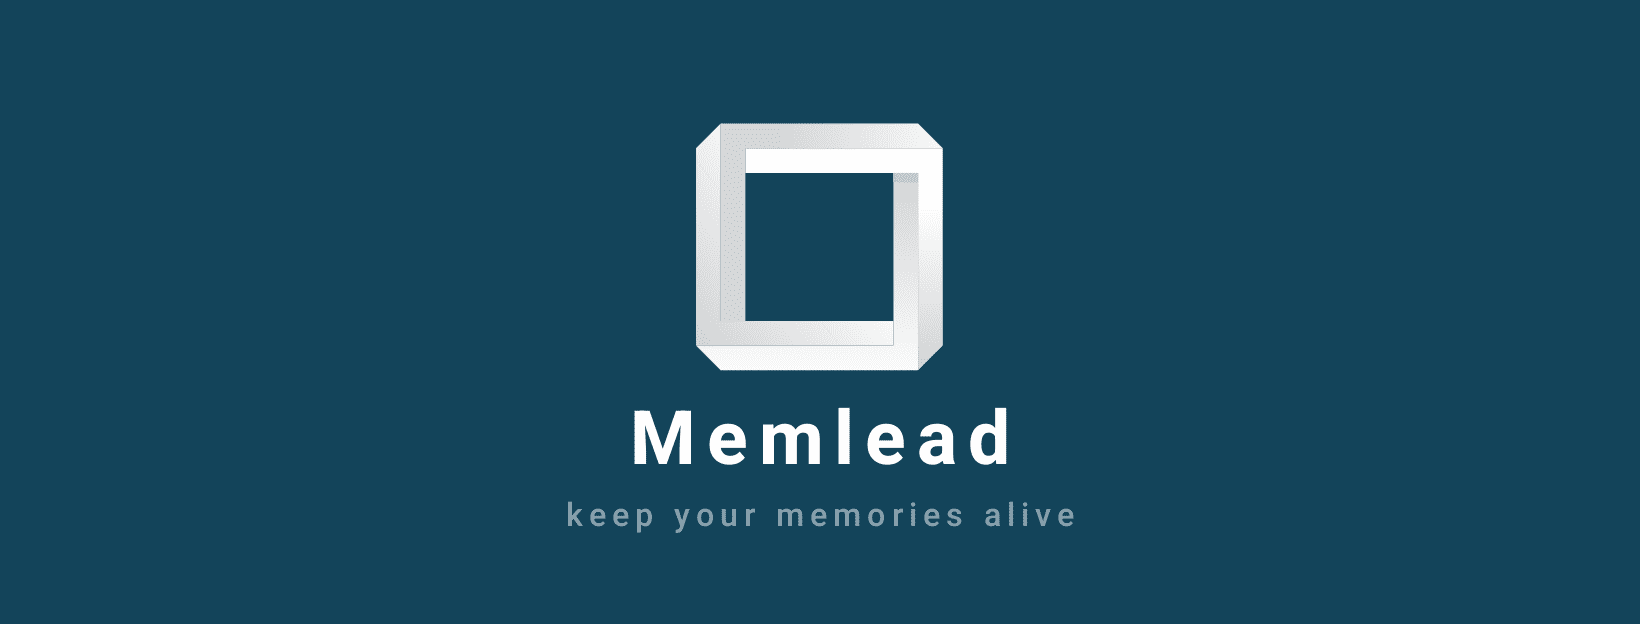 Memlead